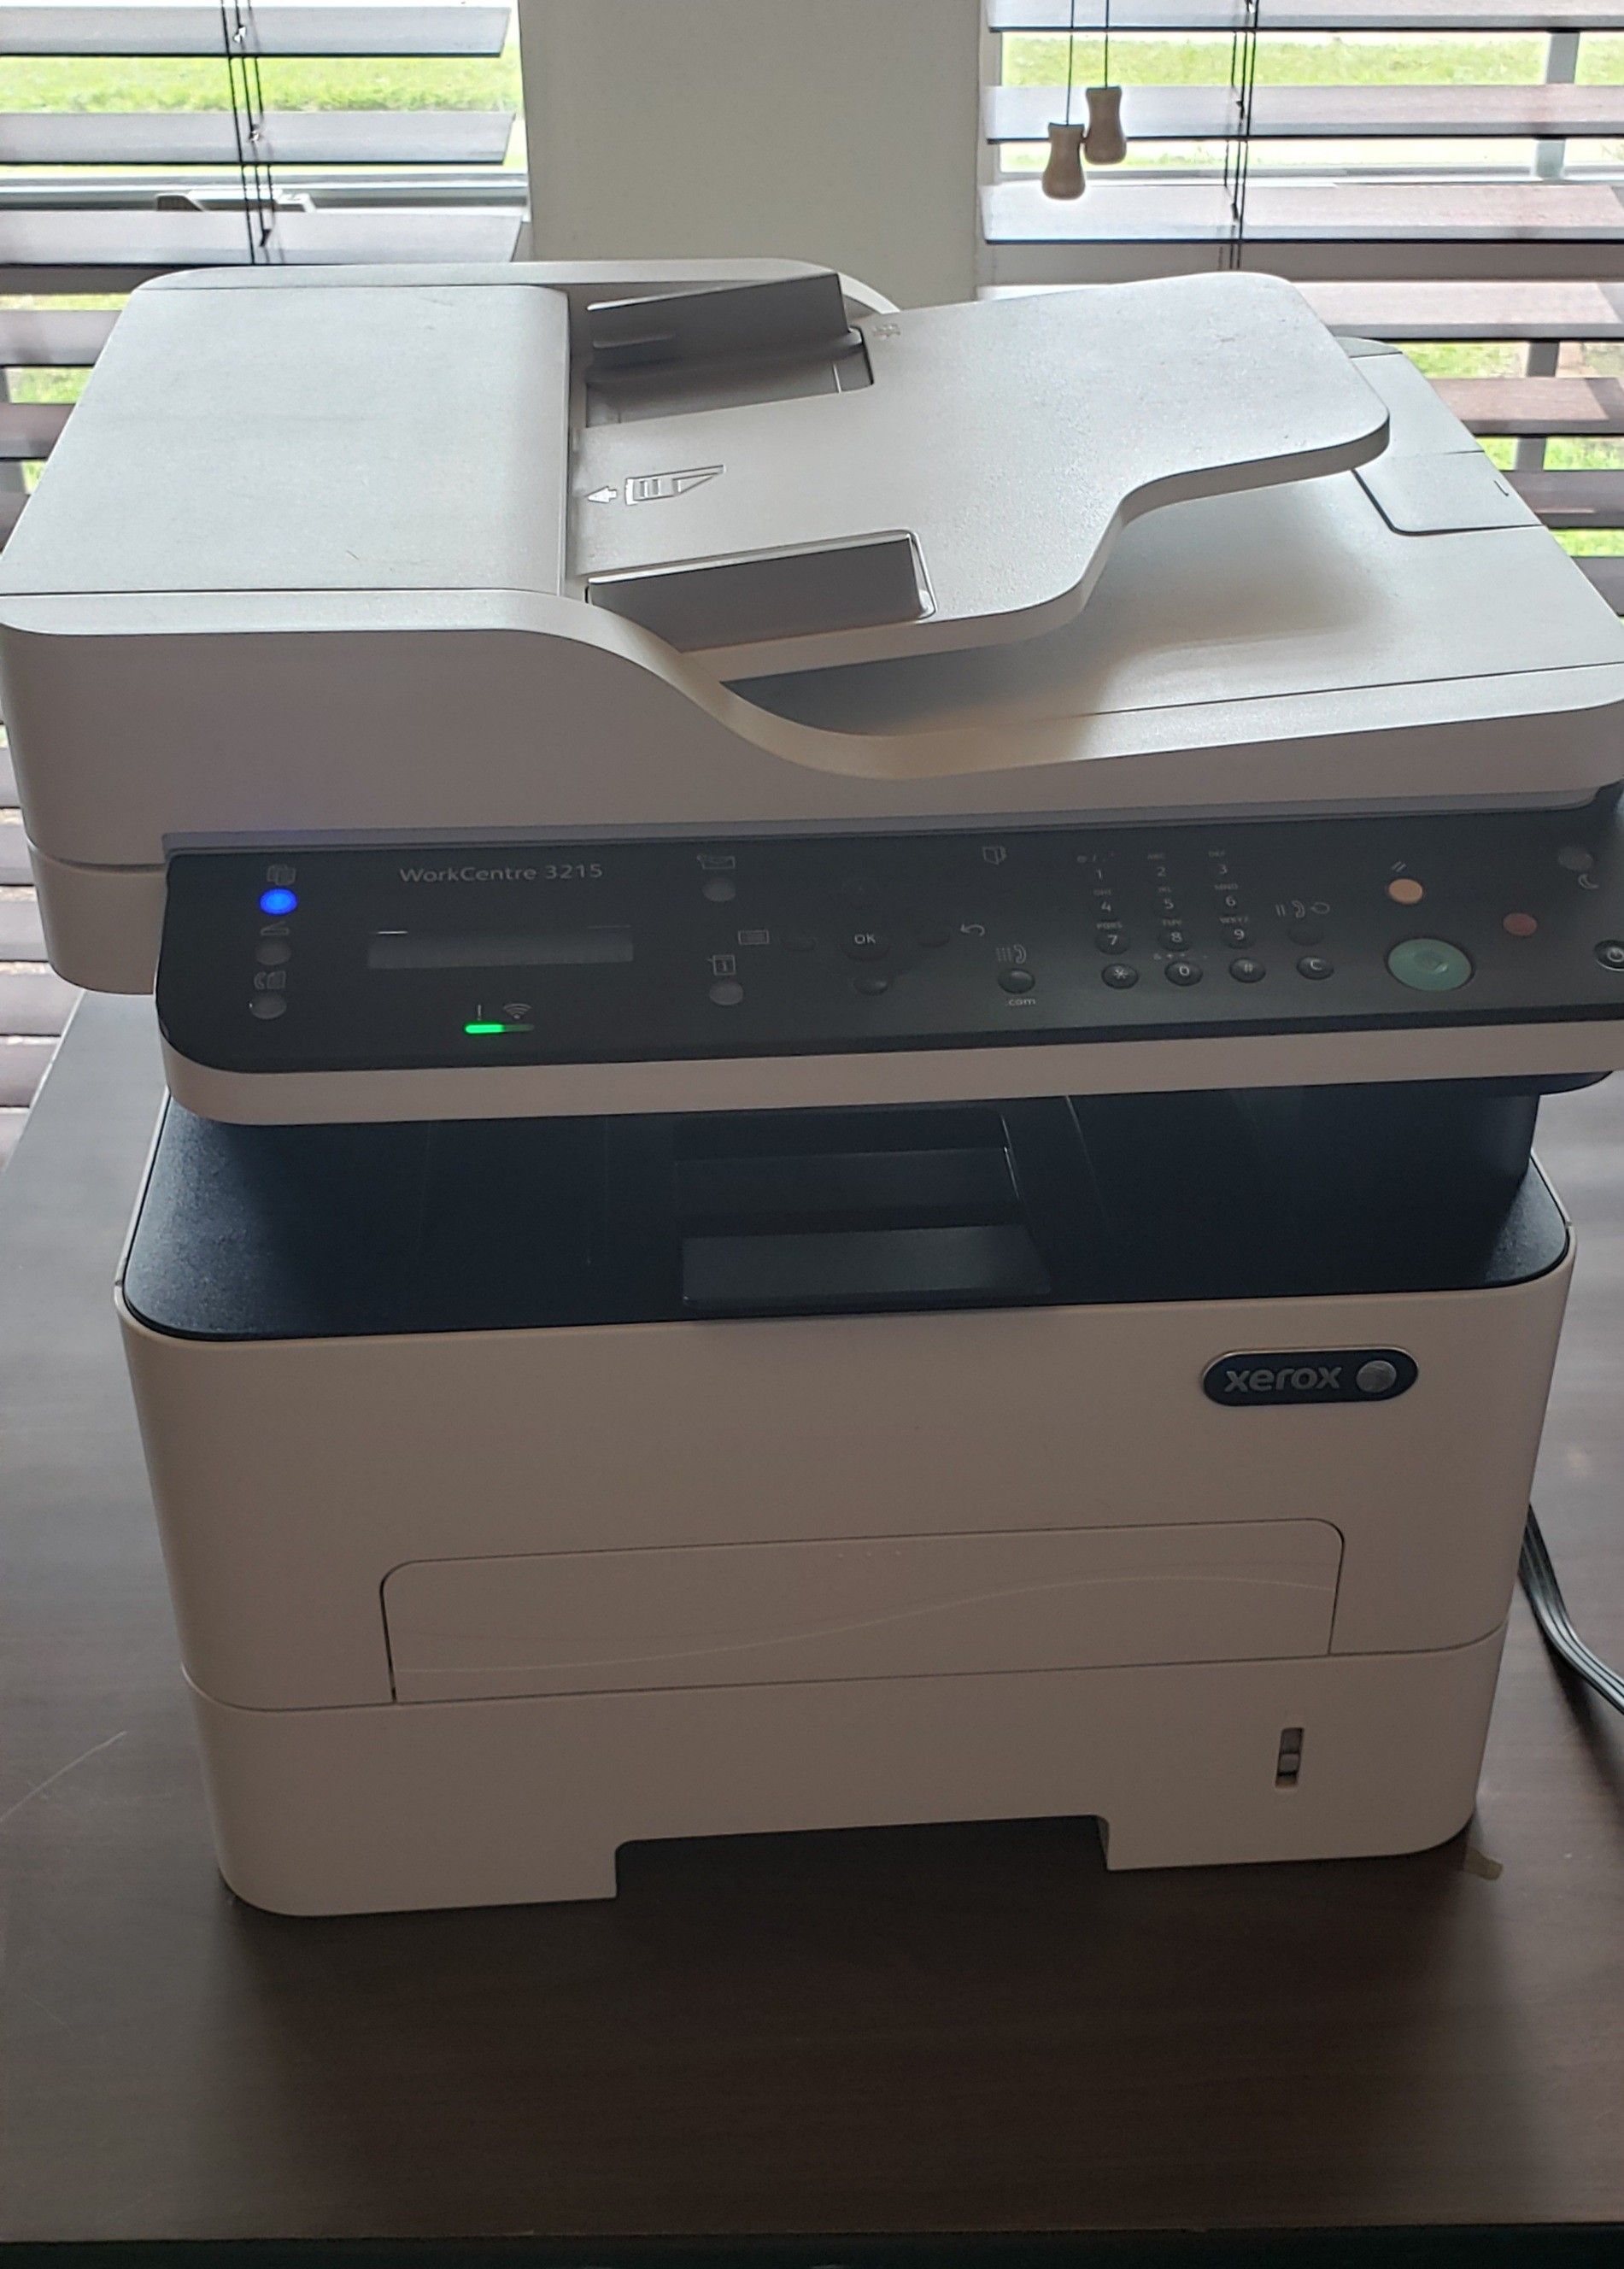 Xerox WorkCenter 3215 black & white laser printer